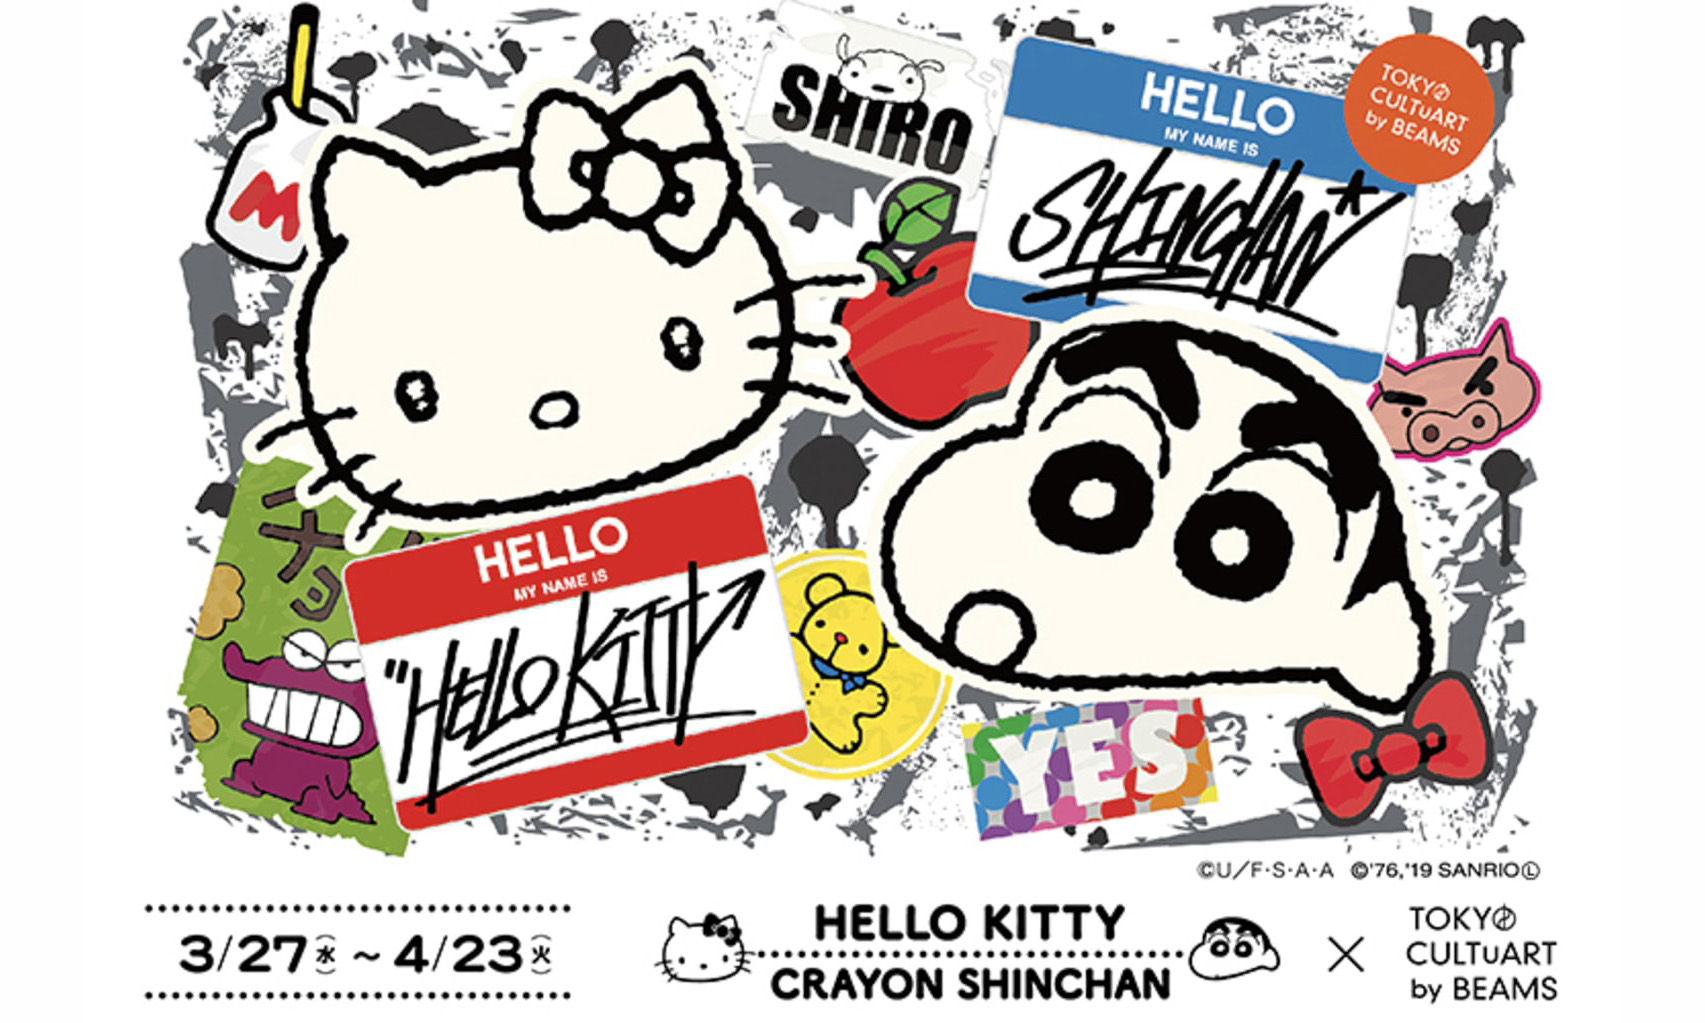 TOKYO CULTUART by BEAMS 这次主角是 Hello Kitty 和蜡笔小新